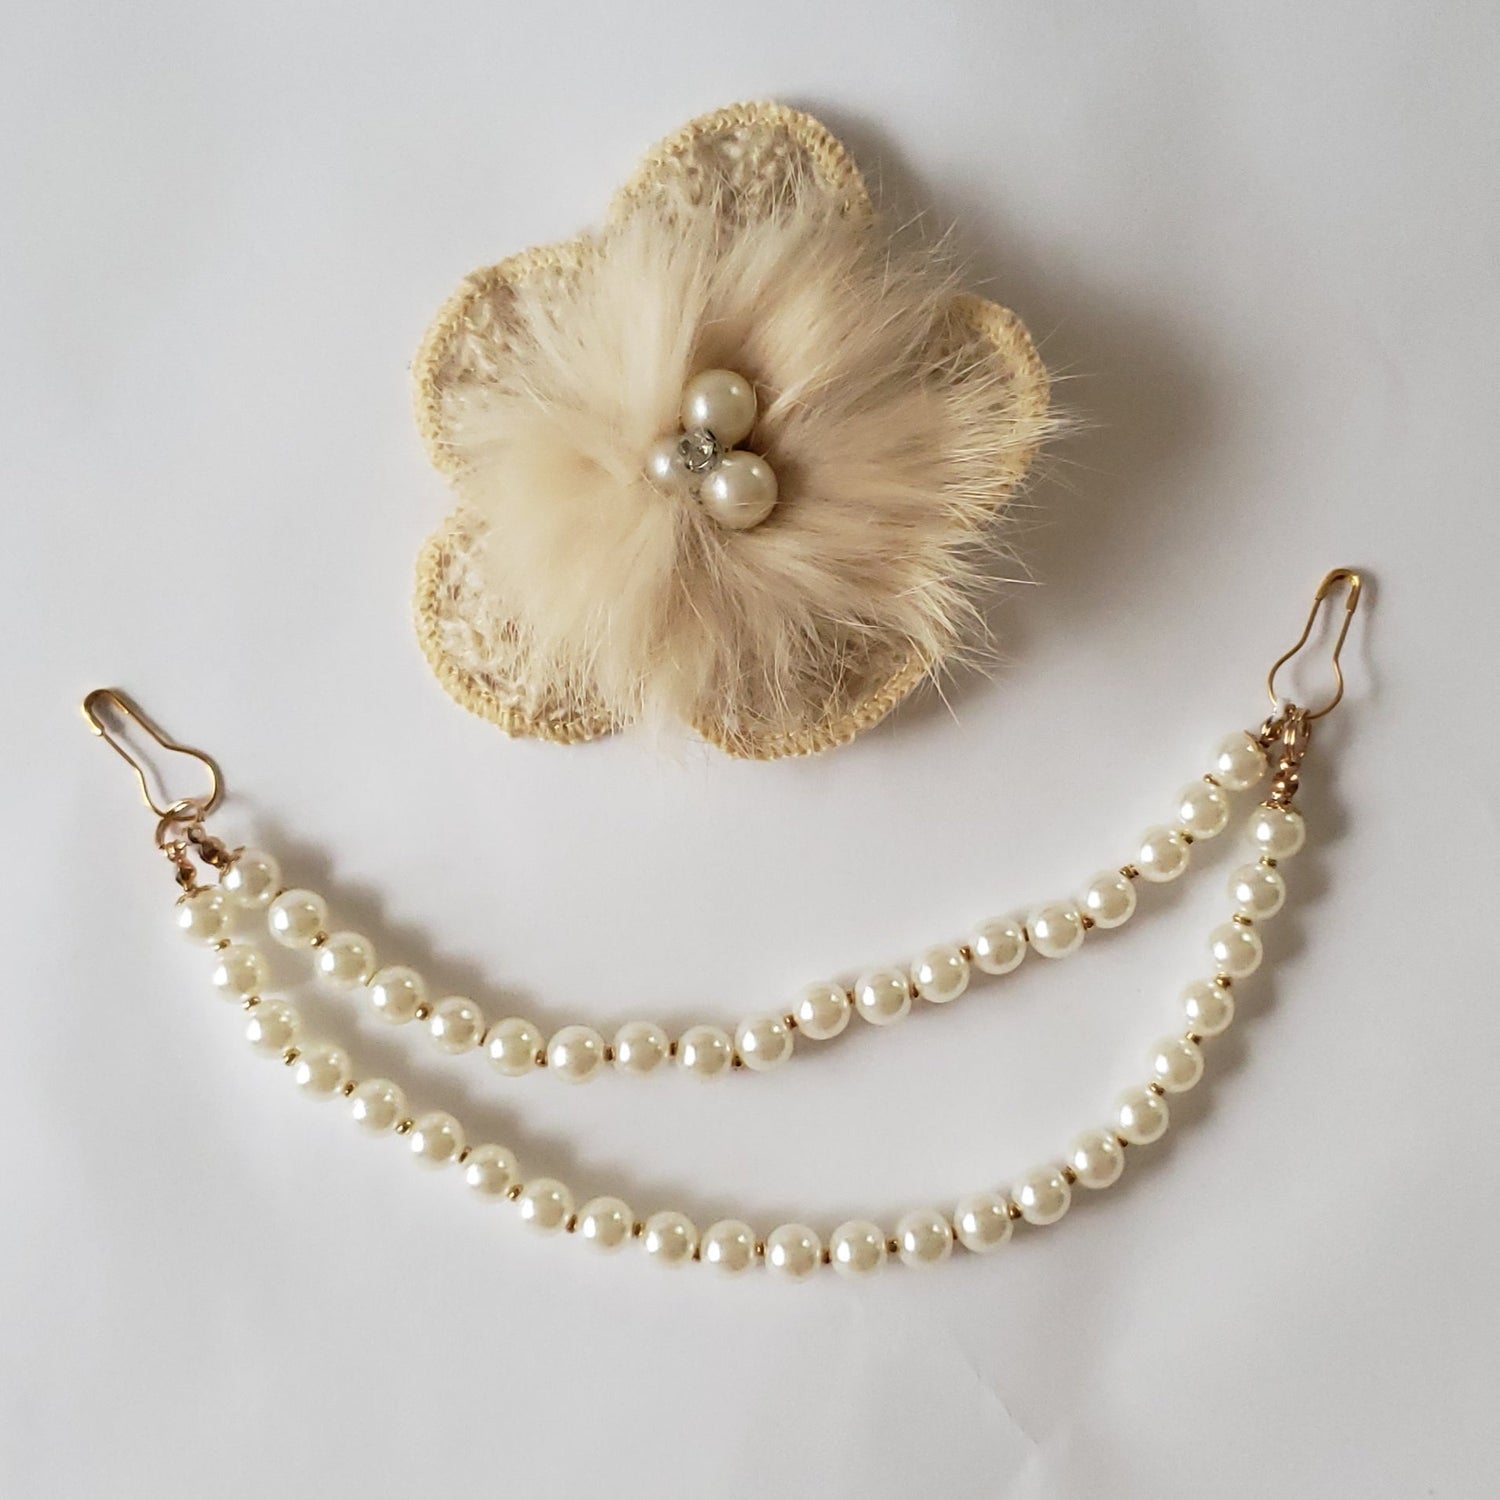 Necklaces, Flowers, & Bow ties - Hilwah 